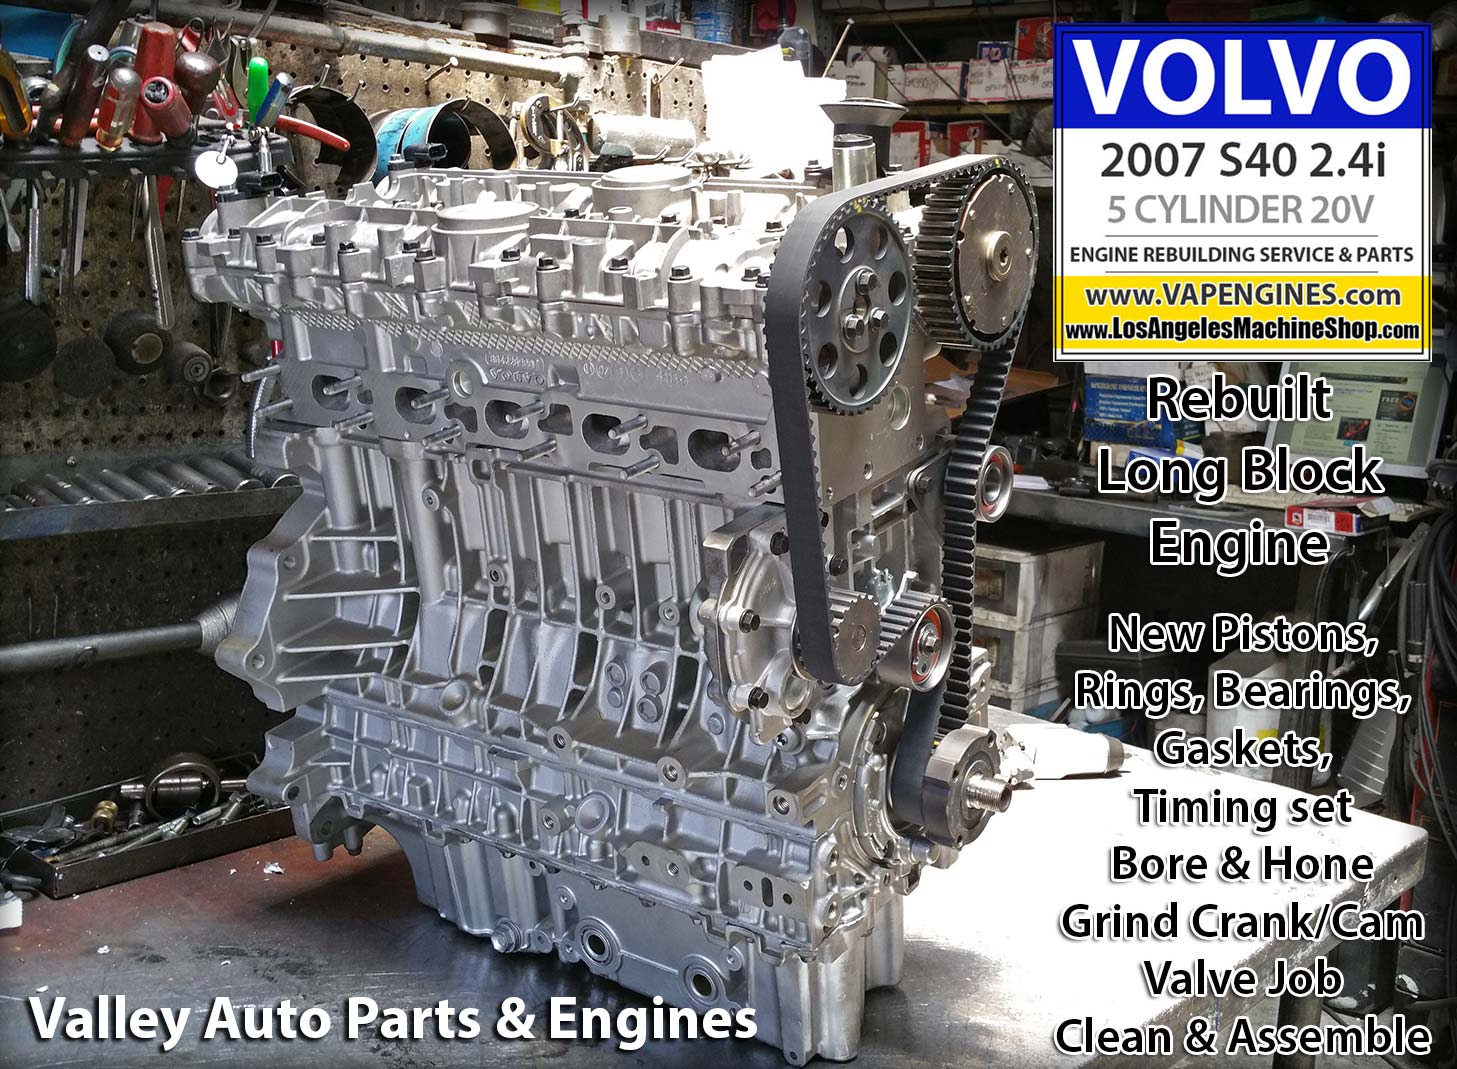 07 Volvo S40 2.4 long block rebuilt engine